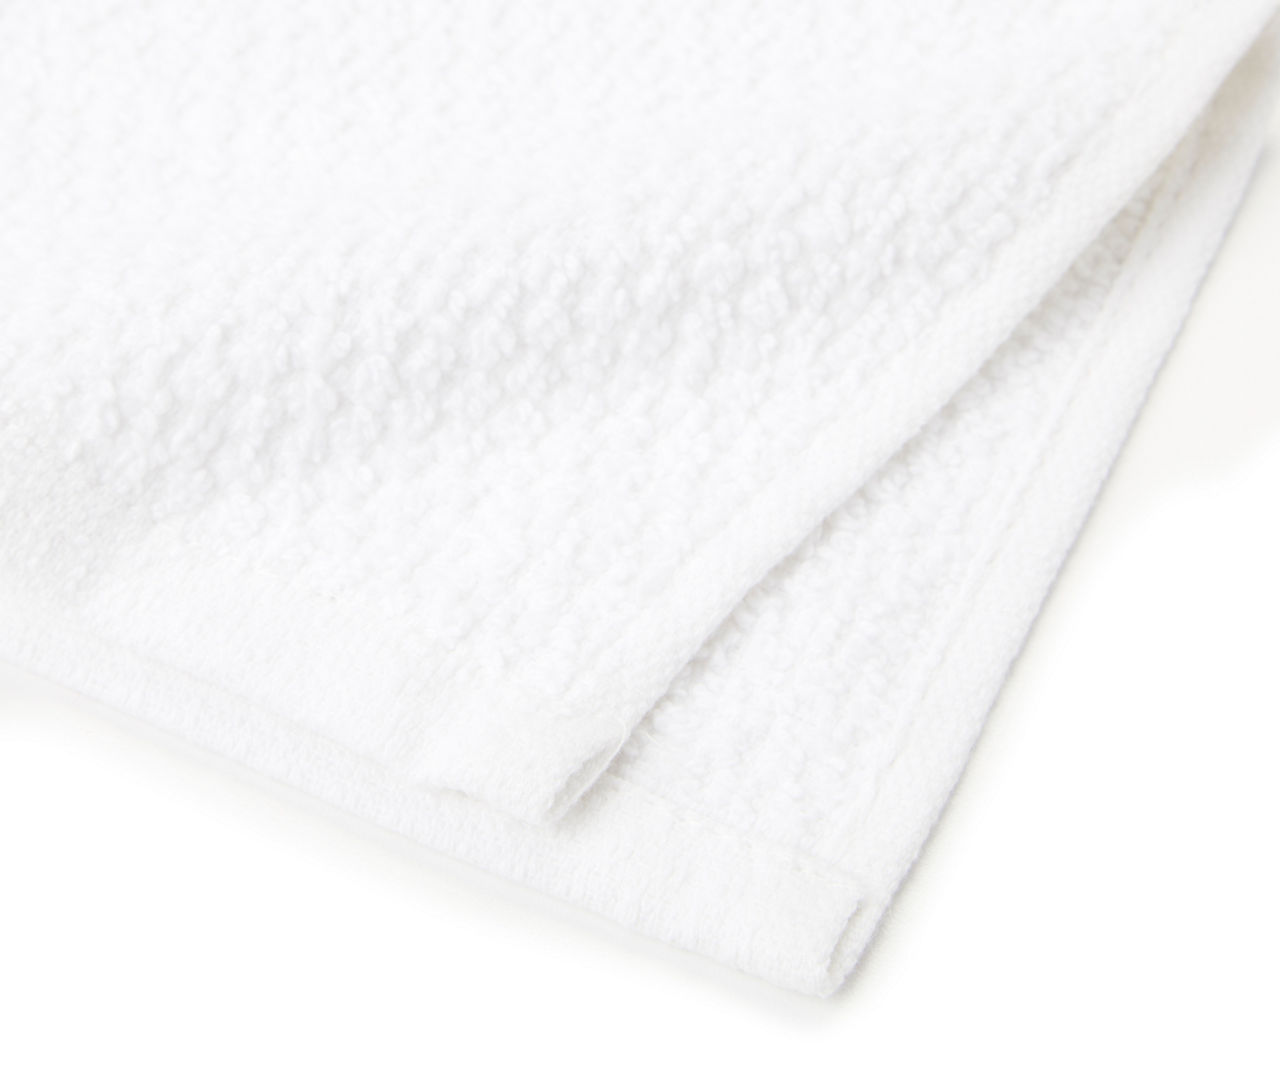 White Washcloths